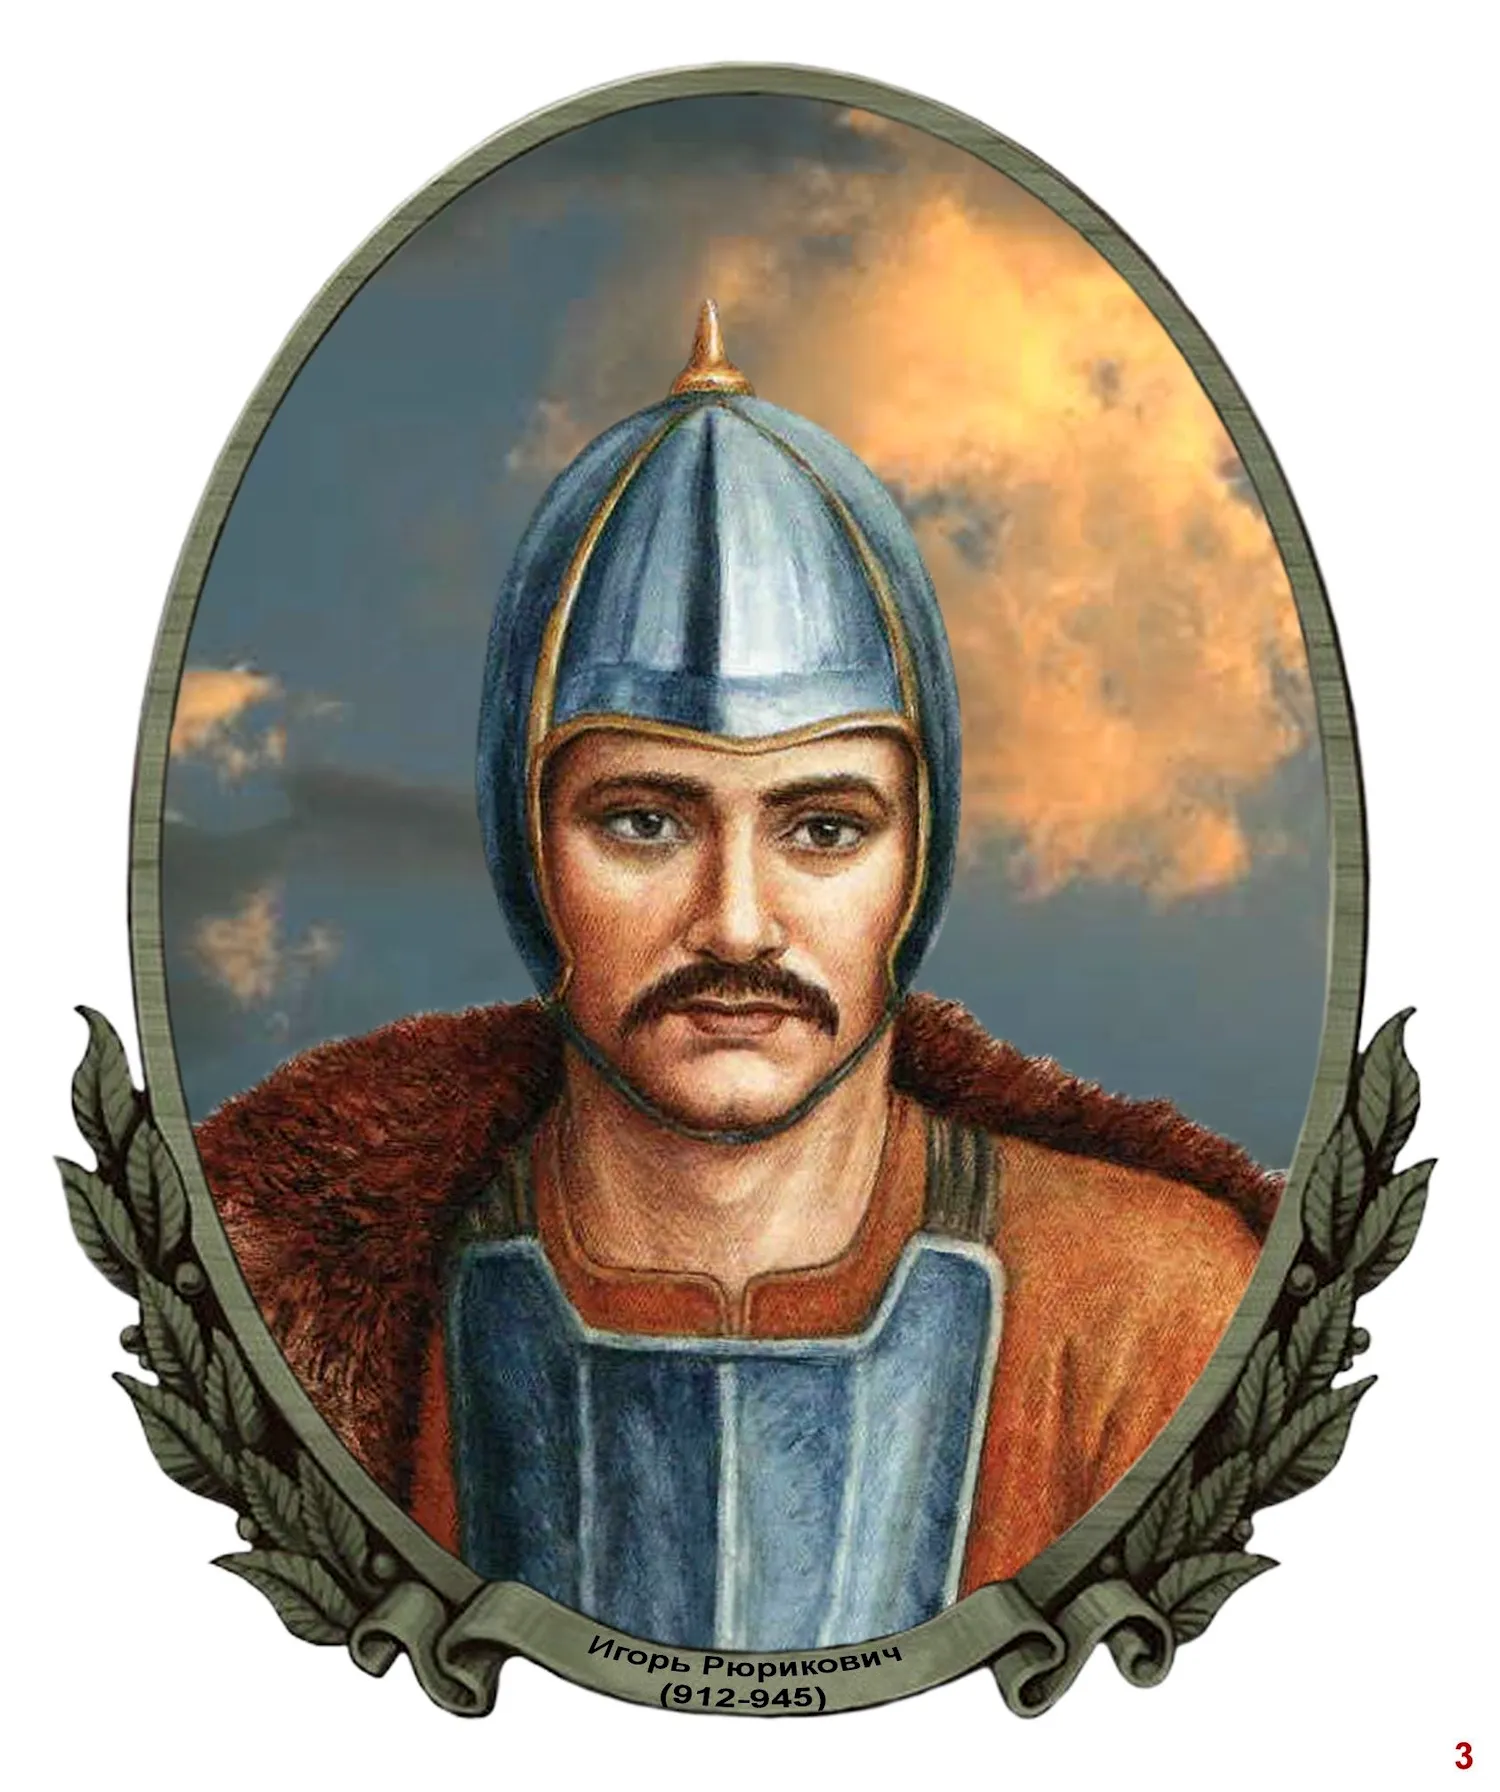 Князь Игорь Рюрикович 912 945